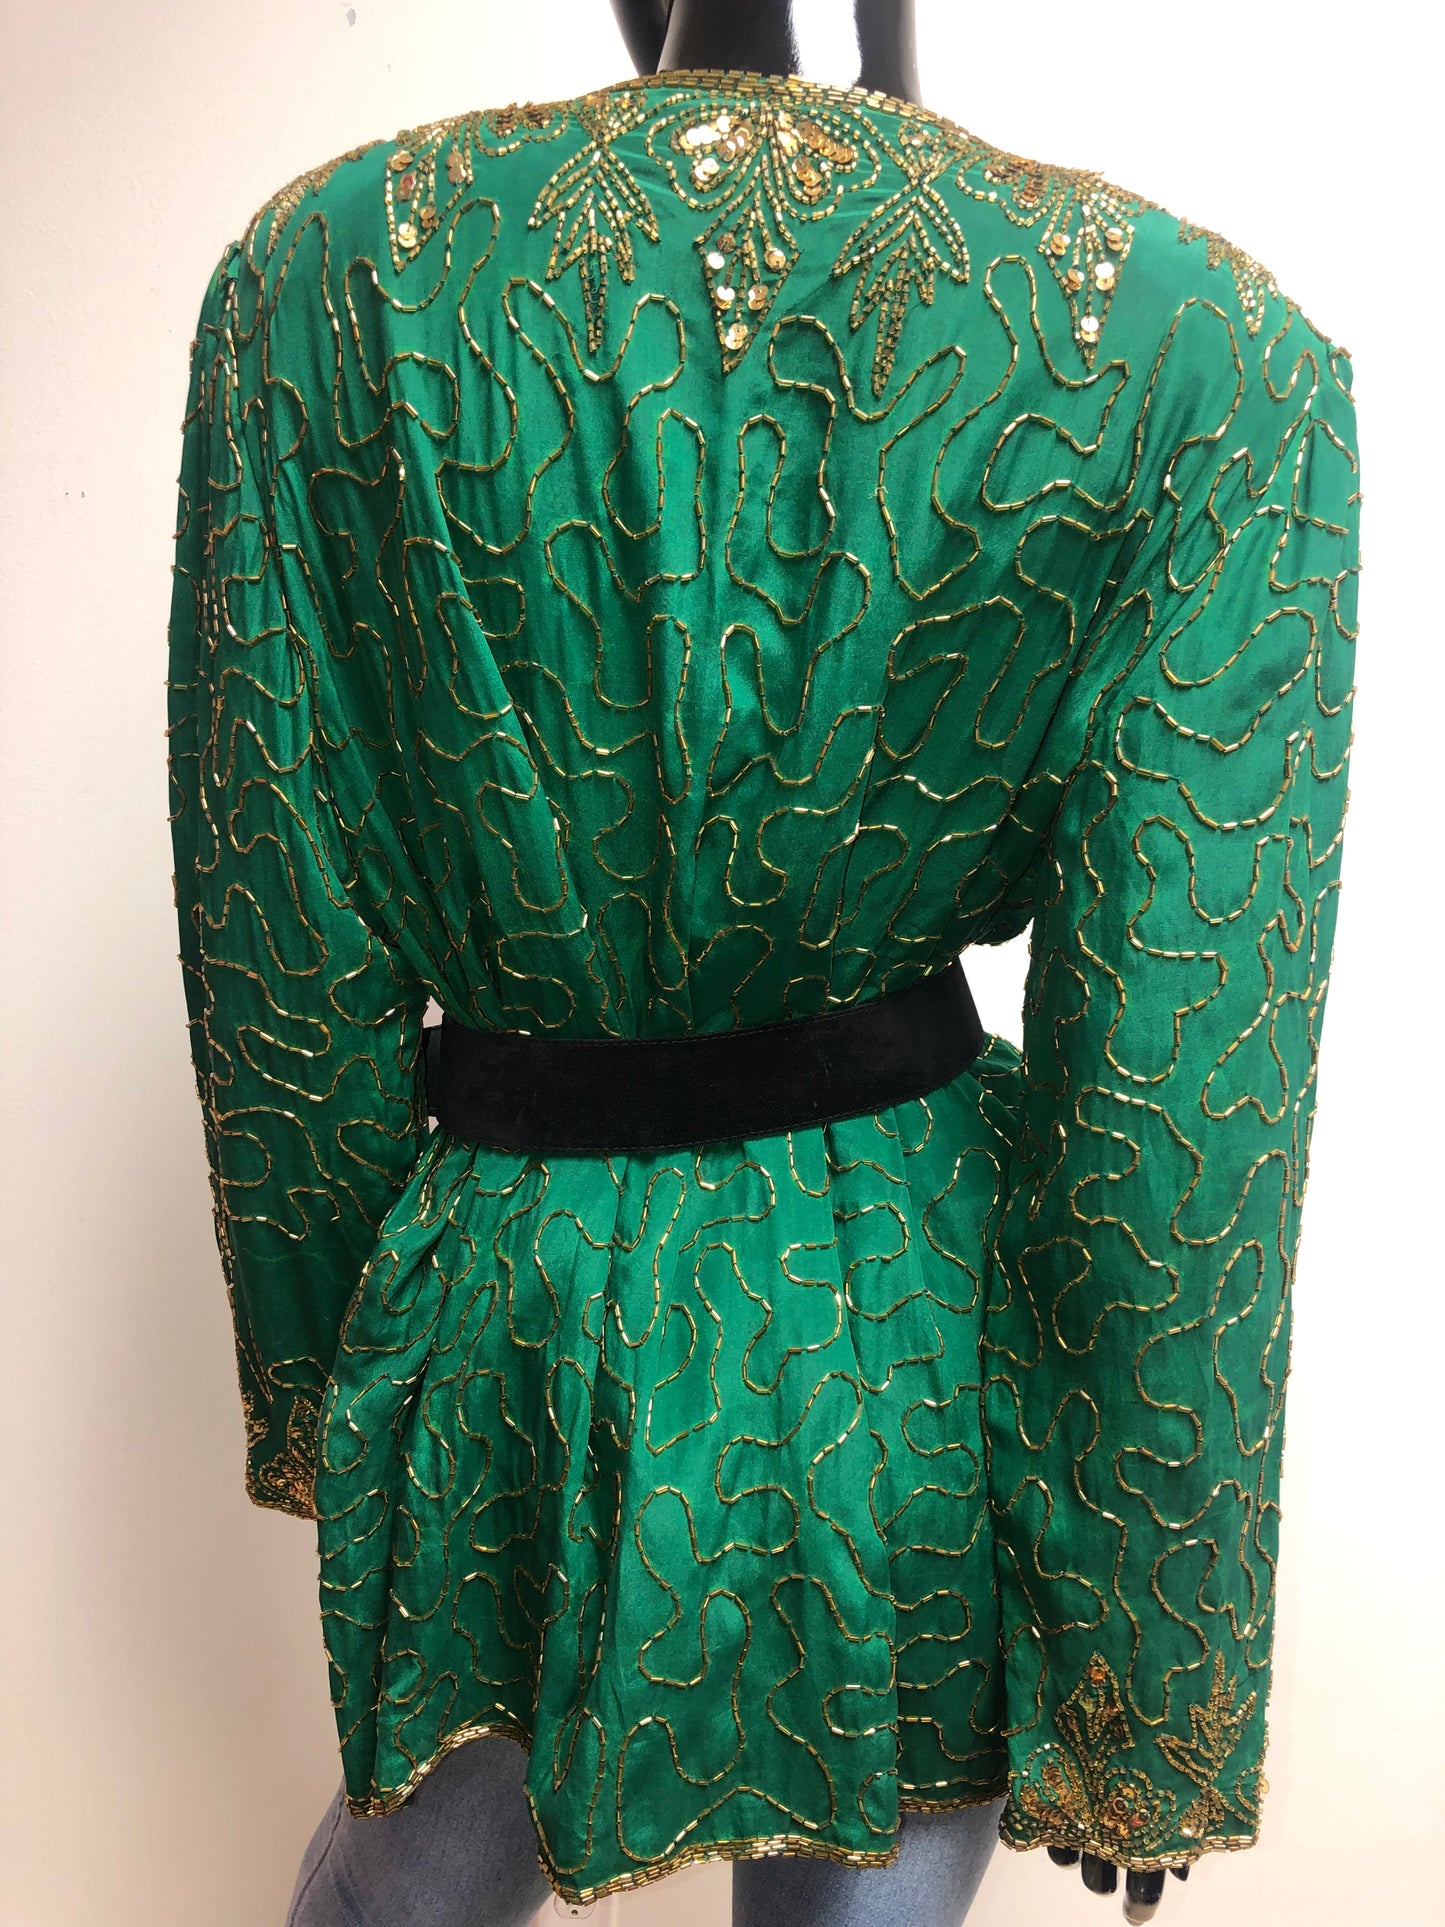 Vintage Emmy Green & Gold Sequin Jacket Size 2X